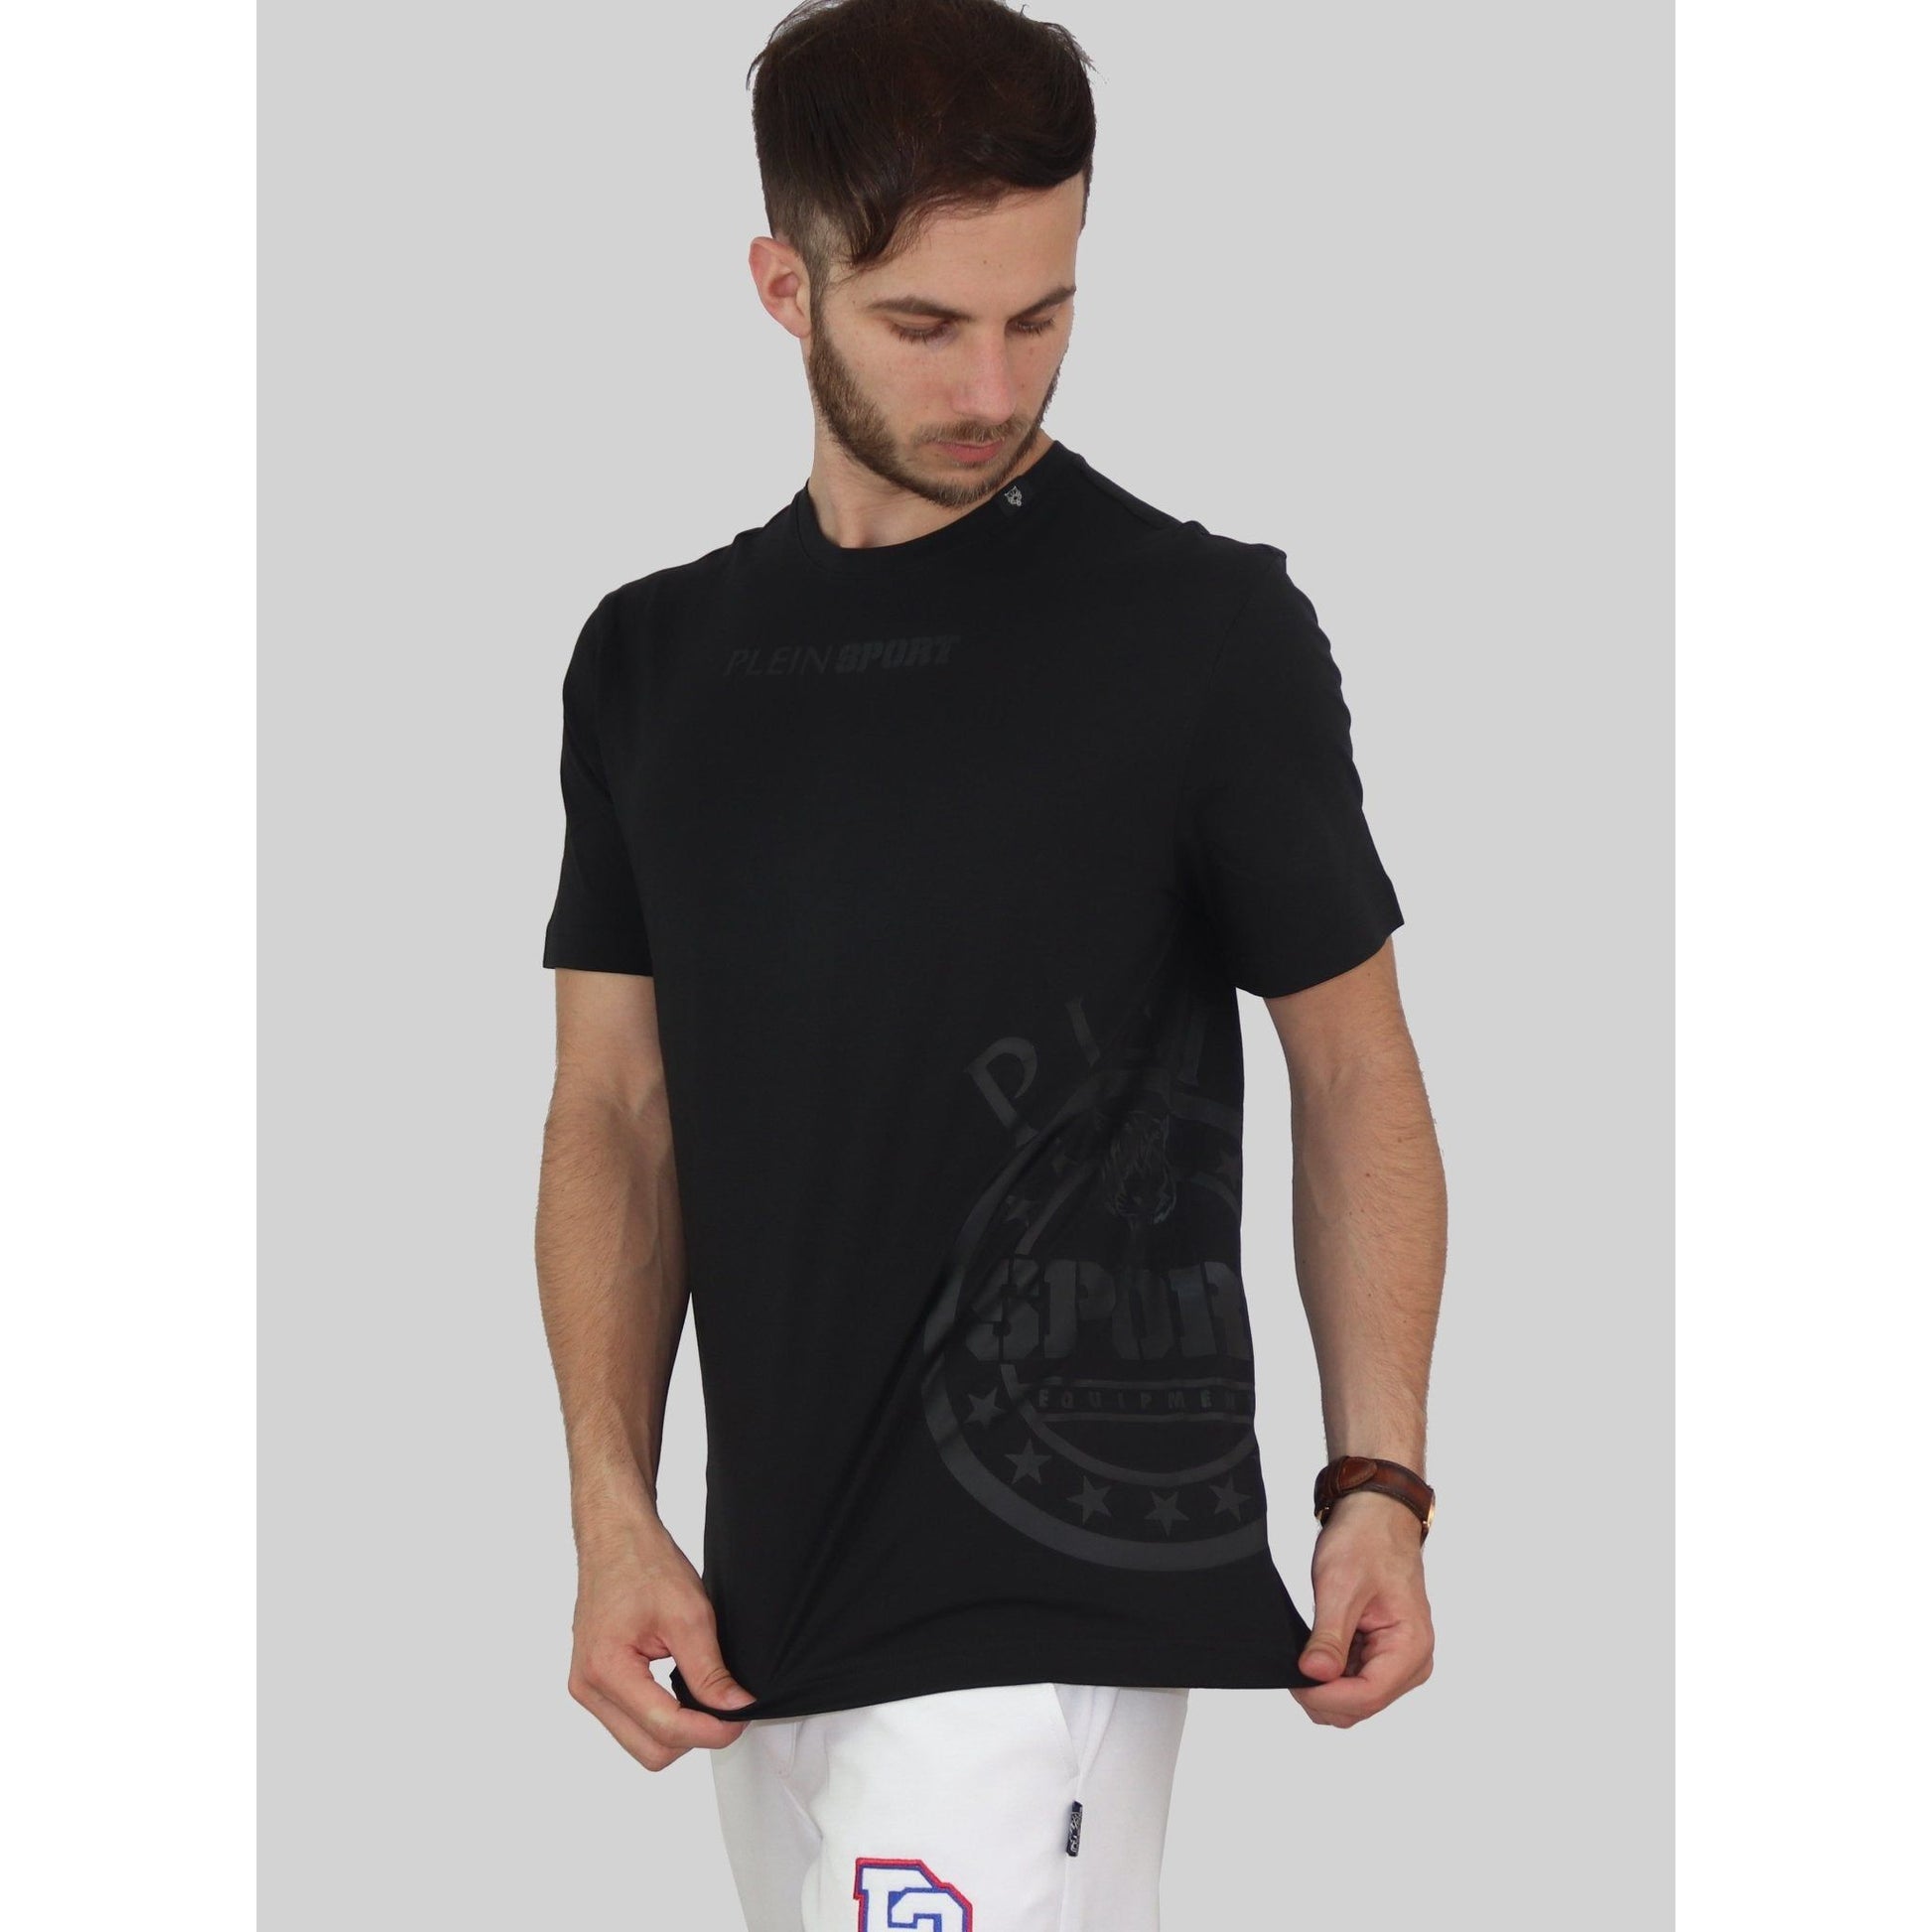 Plein Sport Men's Crew Neck Short Sleeves Printed T-Shirt, Black,Medium - Brandat Outlet